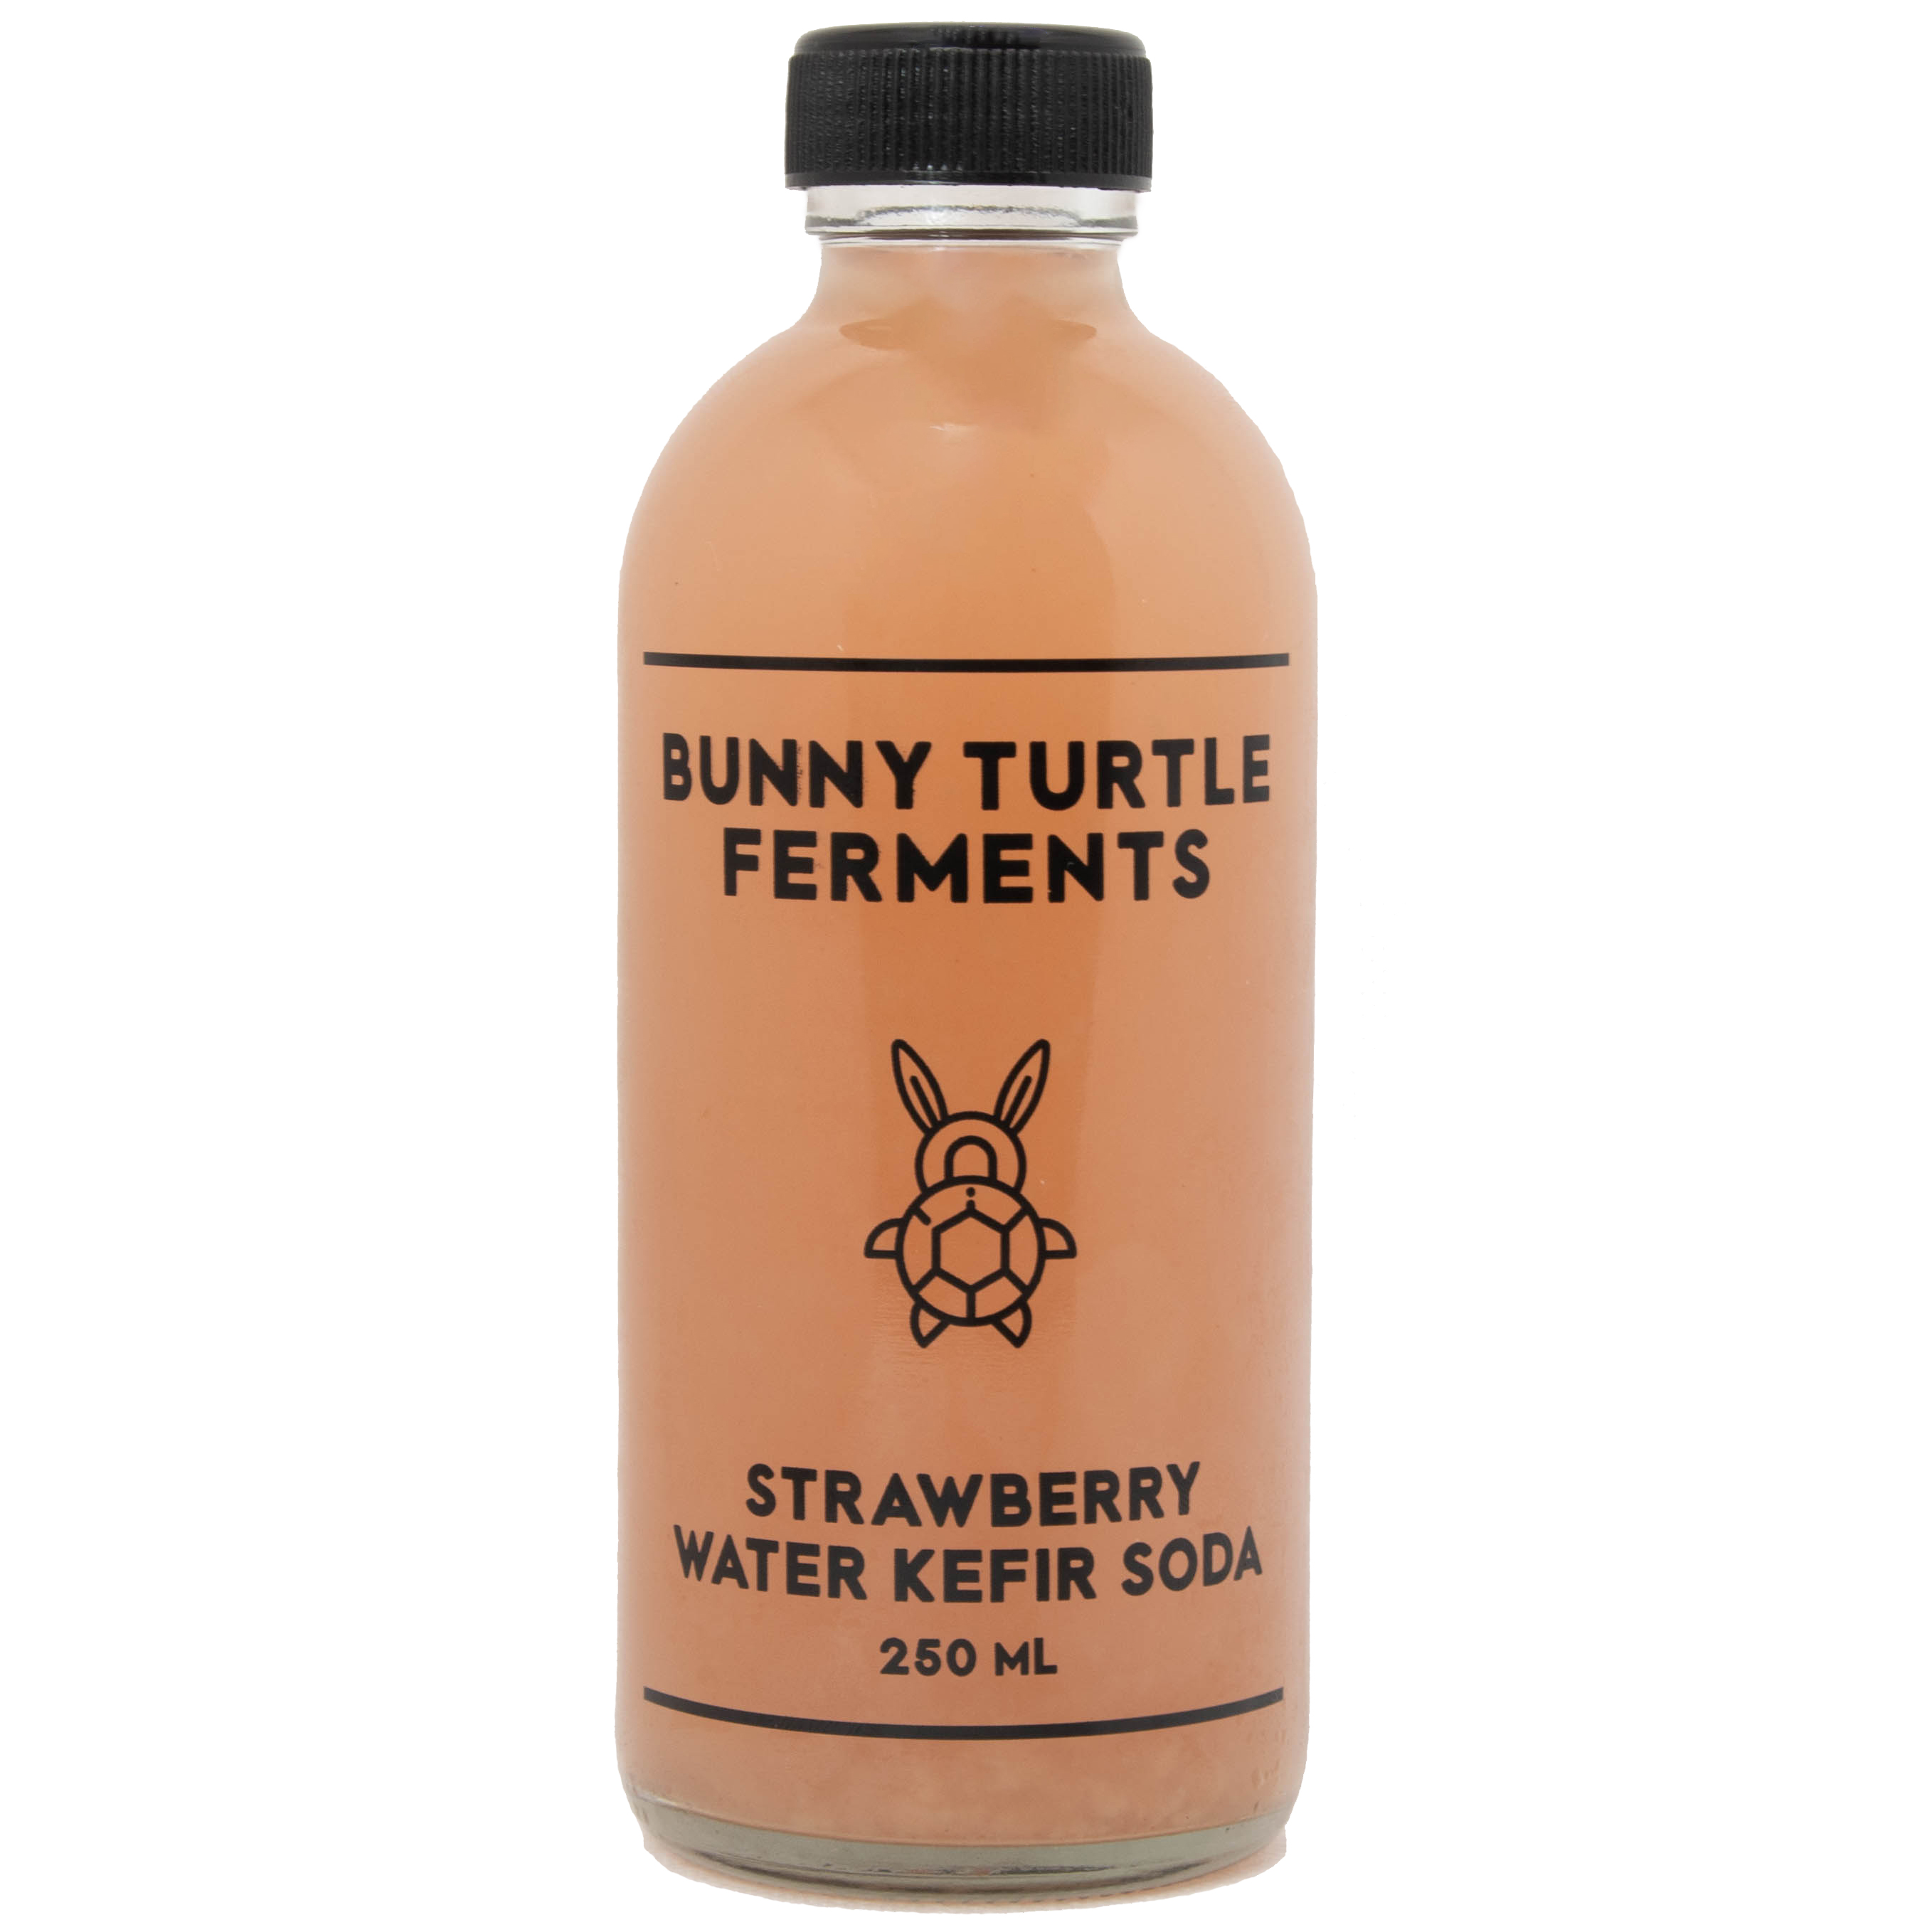 Strawberry Water Kefir Soda by Bunny Turtle Ferments